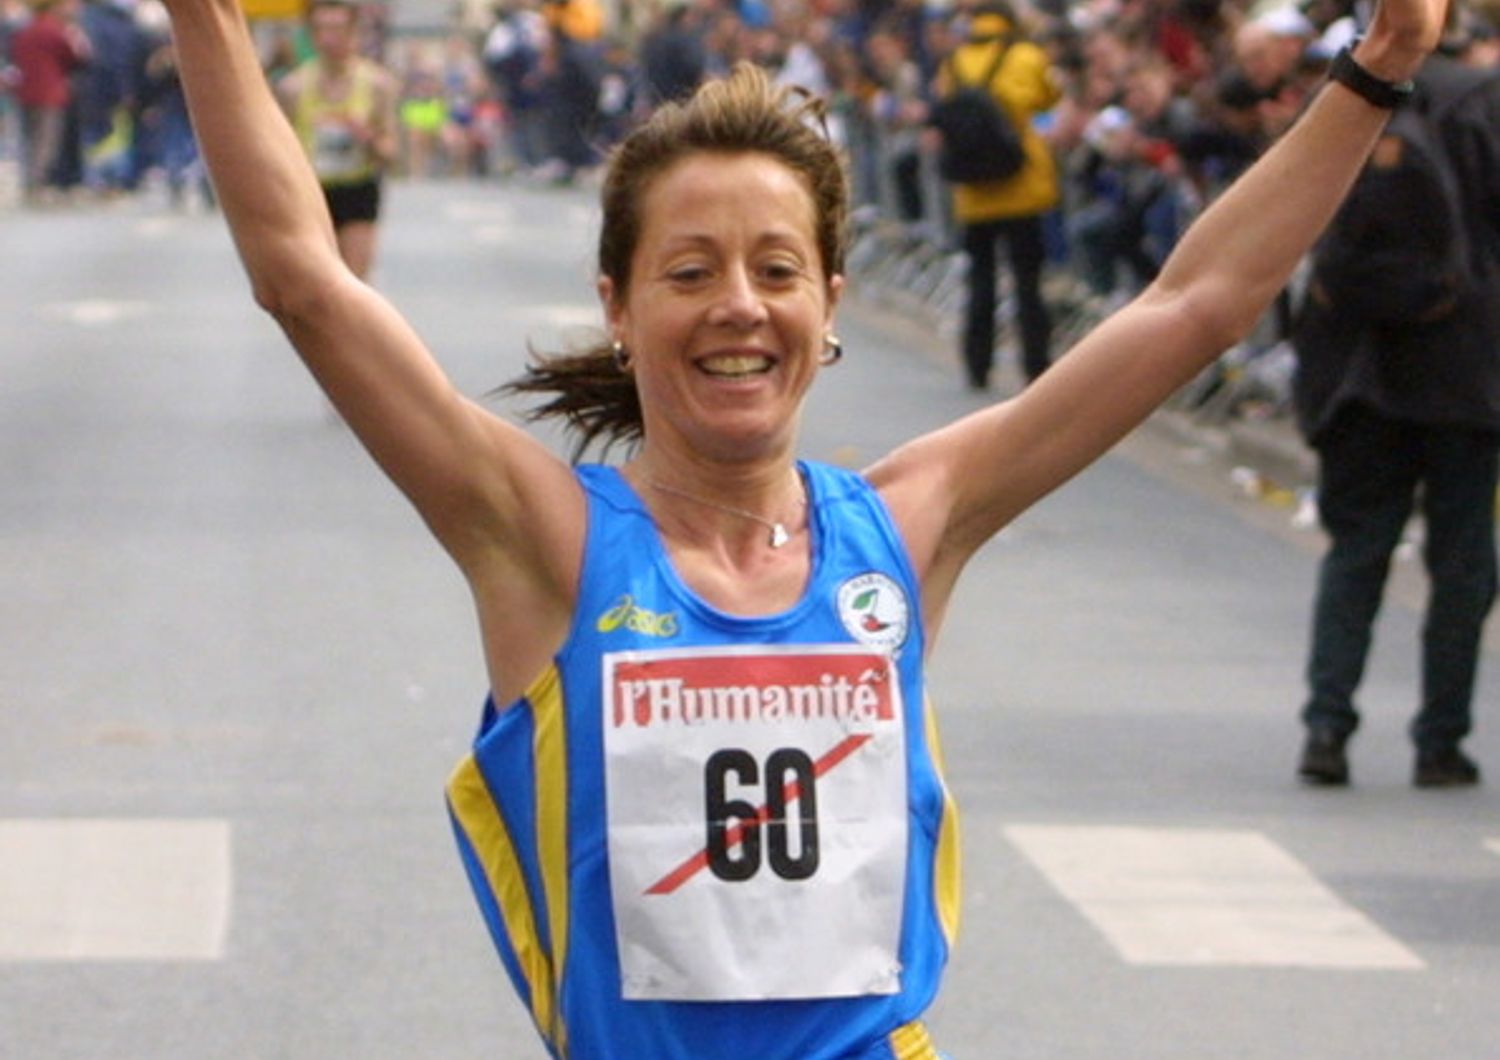 Maura&nbsp;Viceconte, ex primatista italiana della maratona&nbsp;